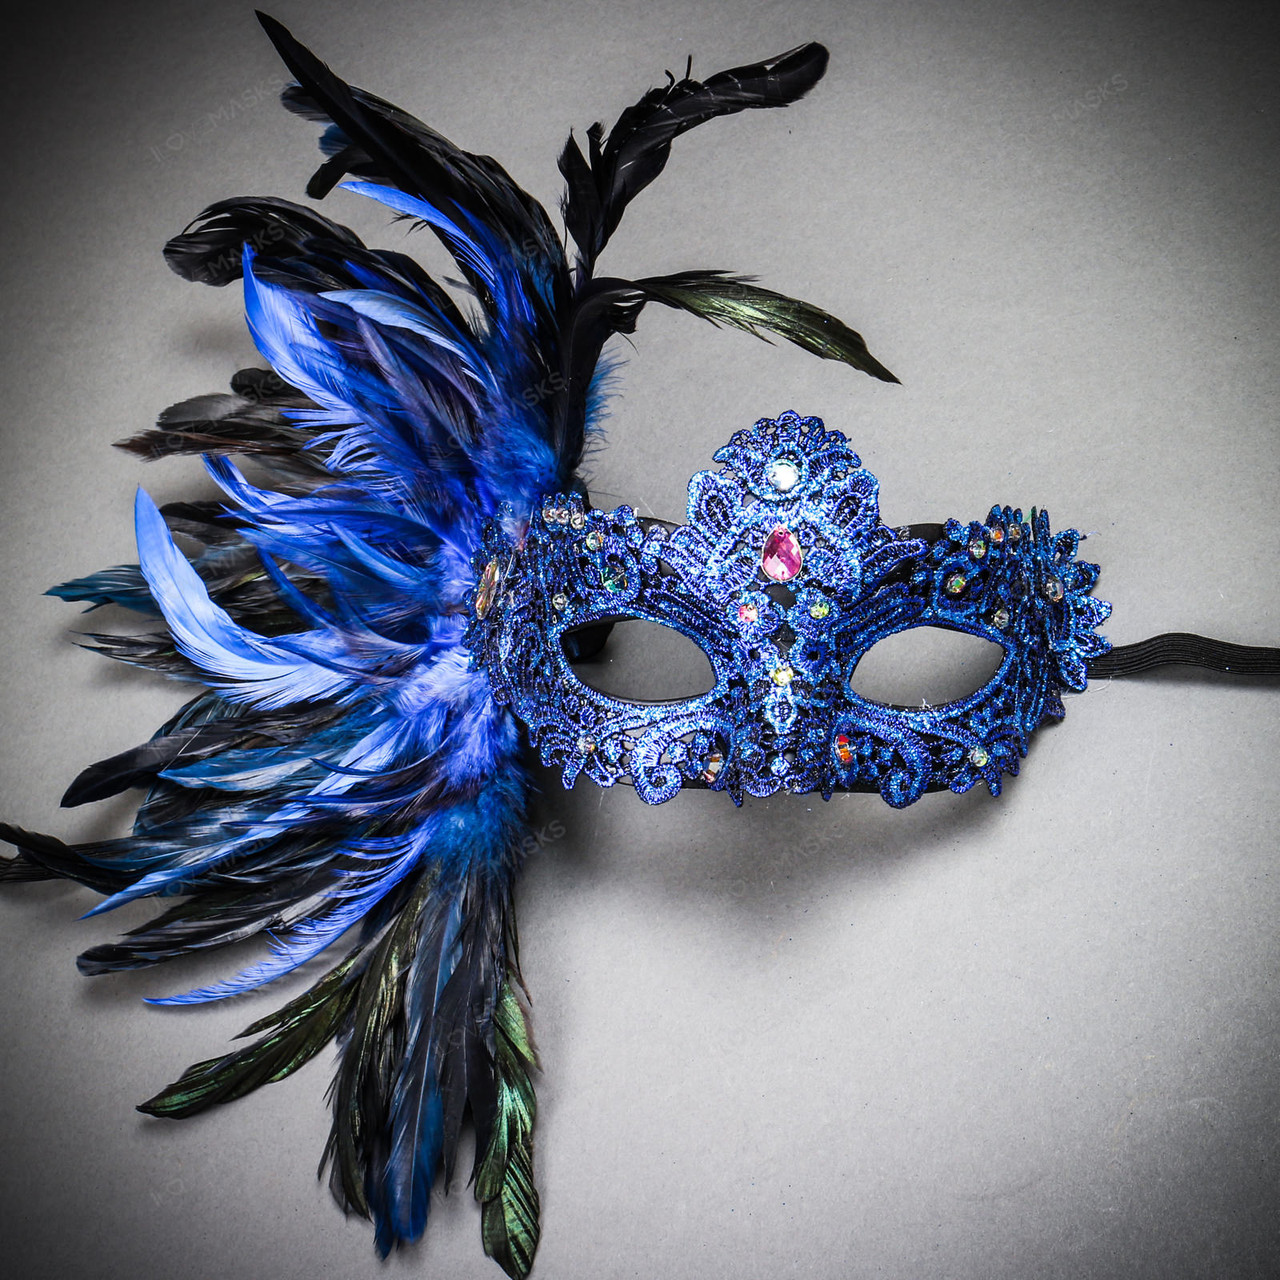 Masquerade Masks Women Luxury, Masquerade Dress Women